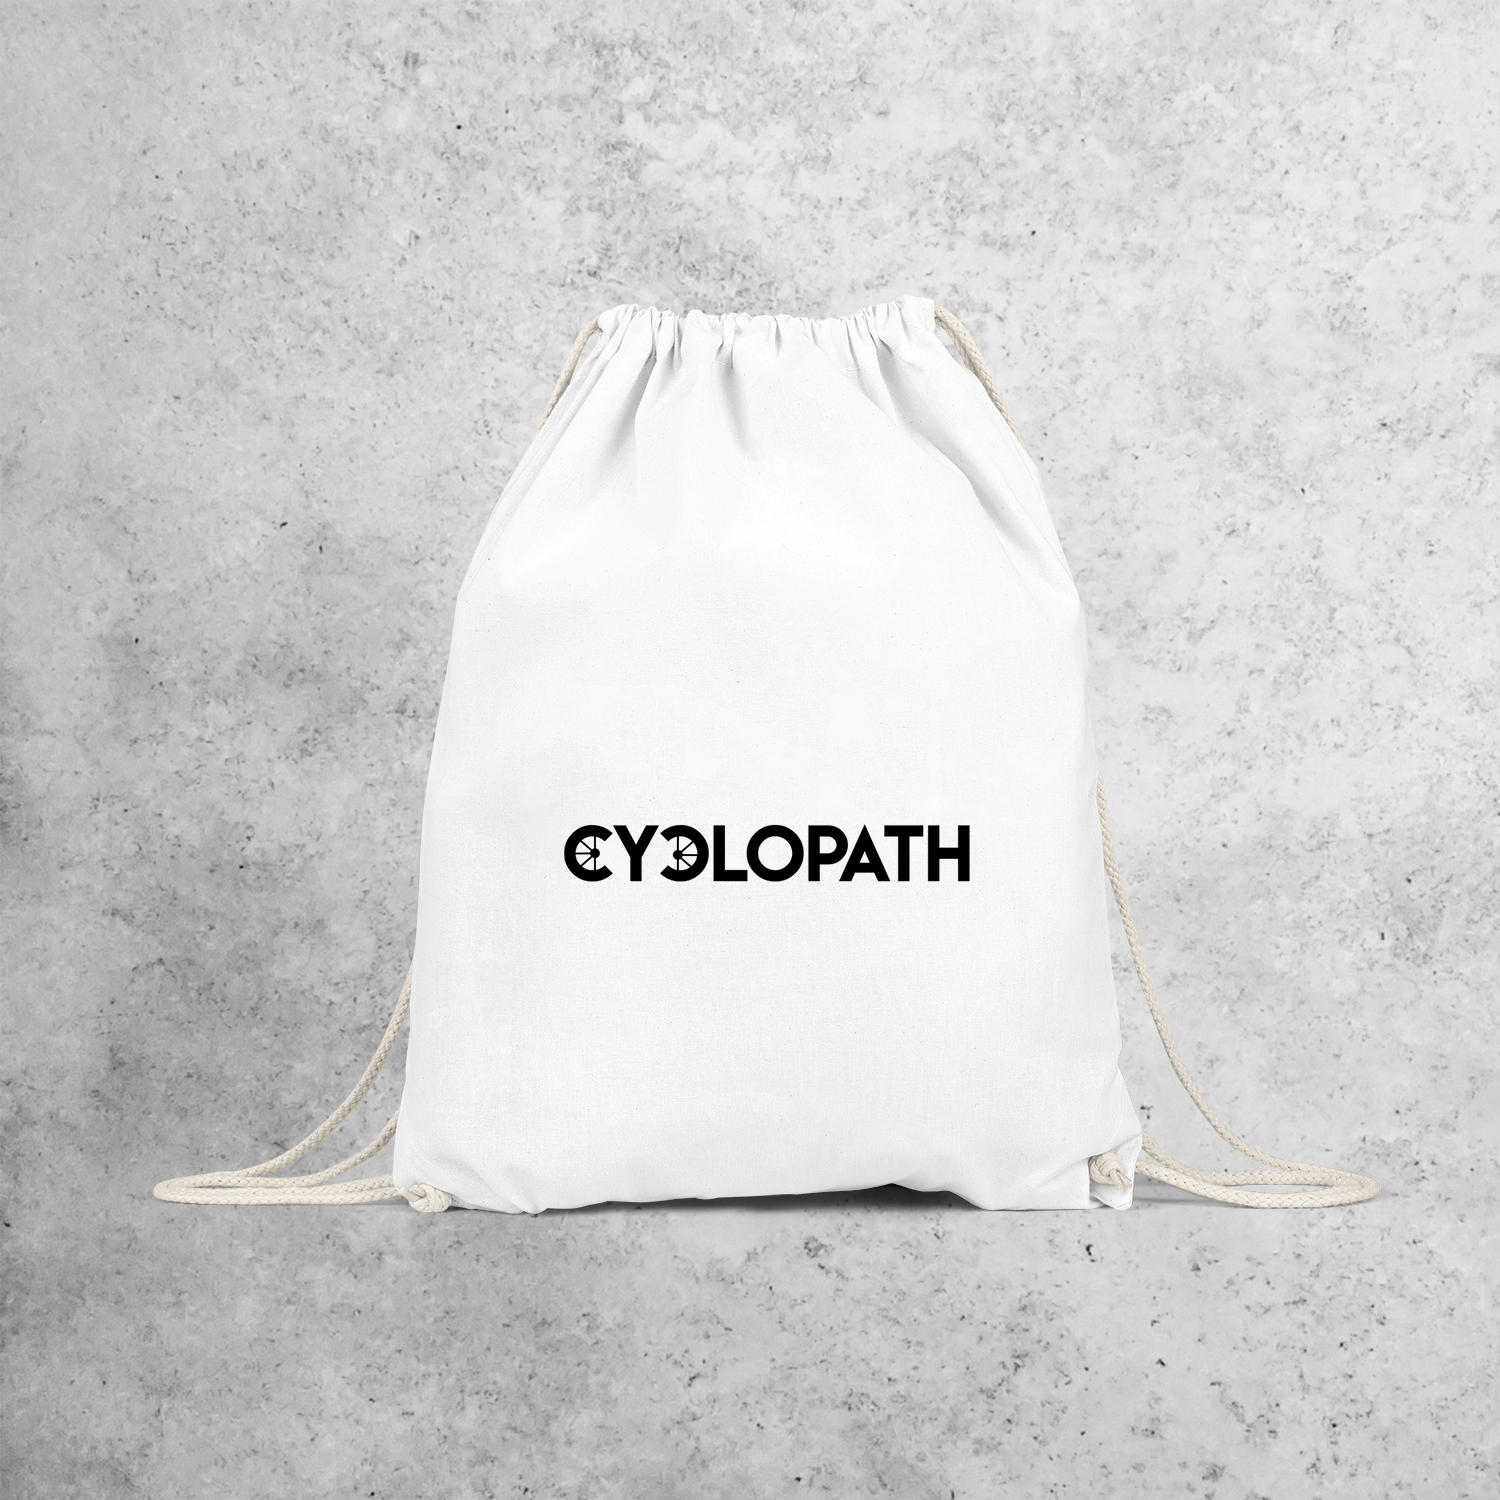 'Cyclopath' backpack